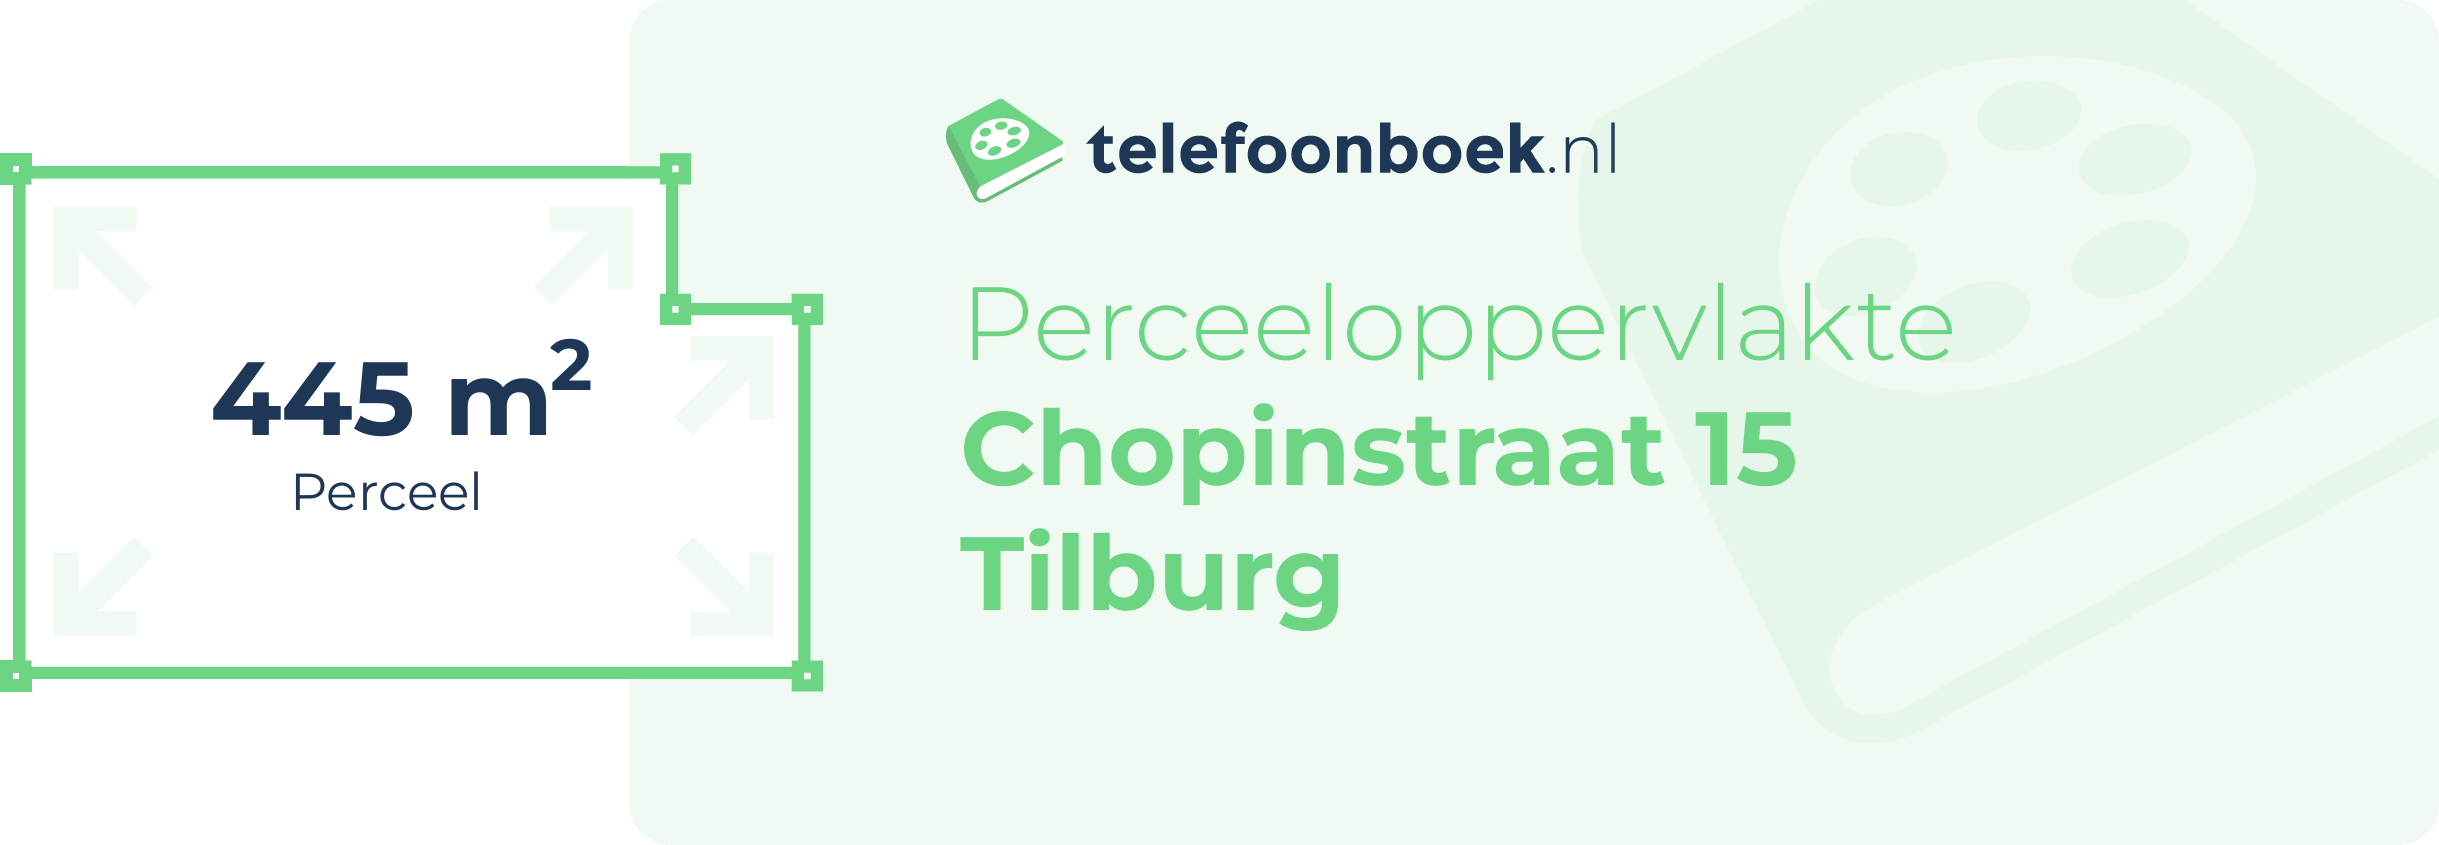 Perceeloppervlakte Chopinstraat 15 Tilburg